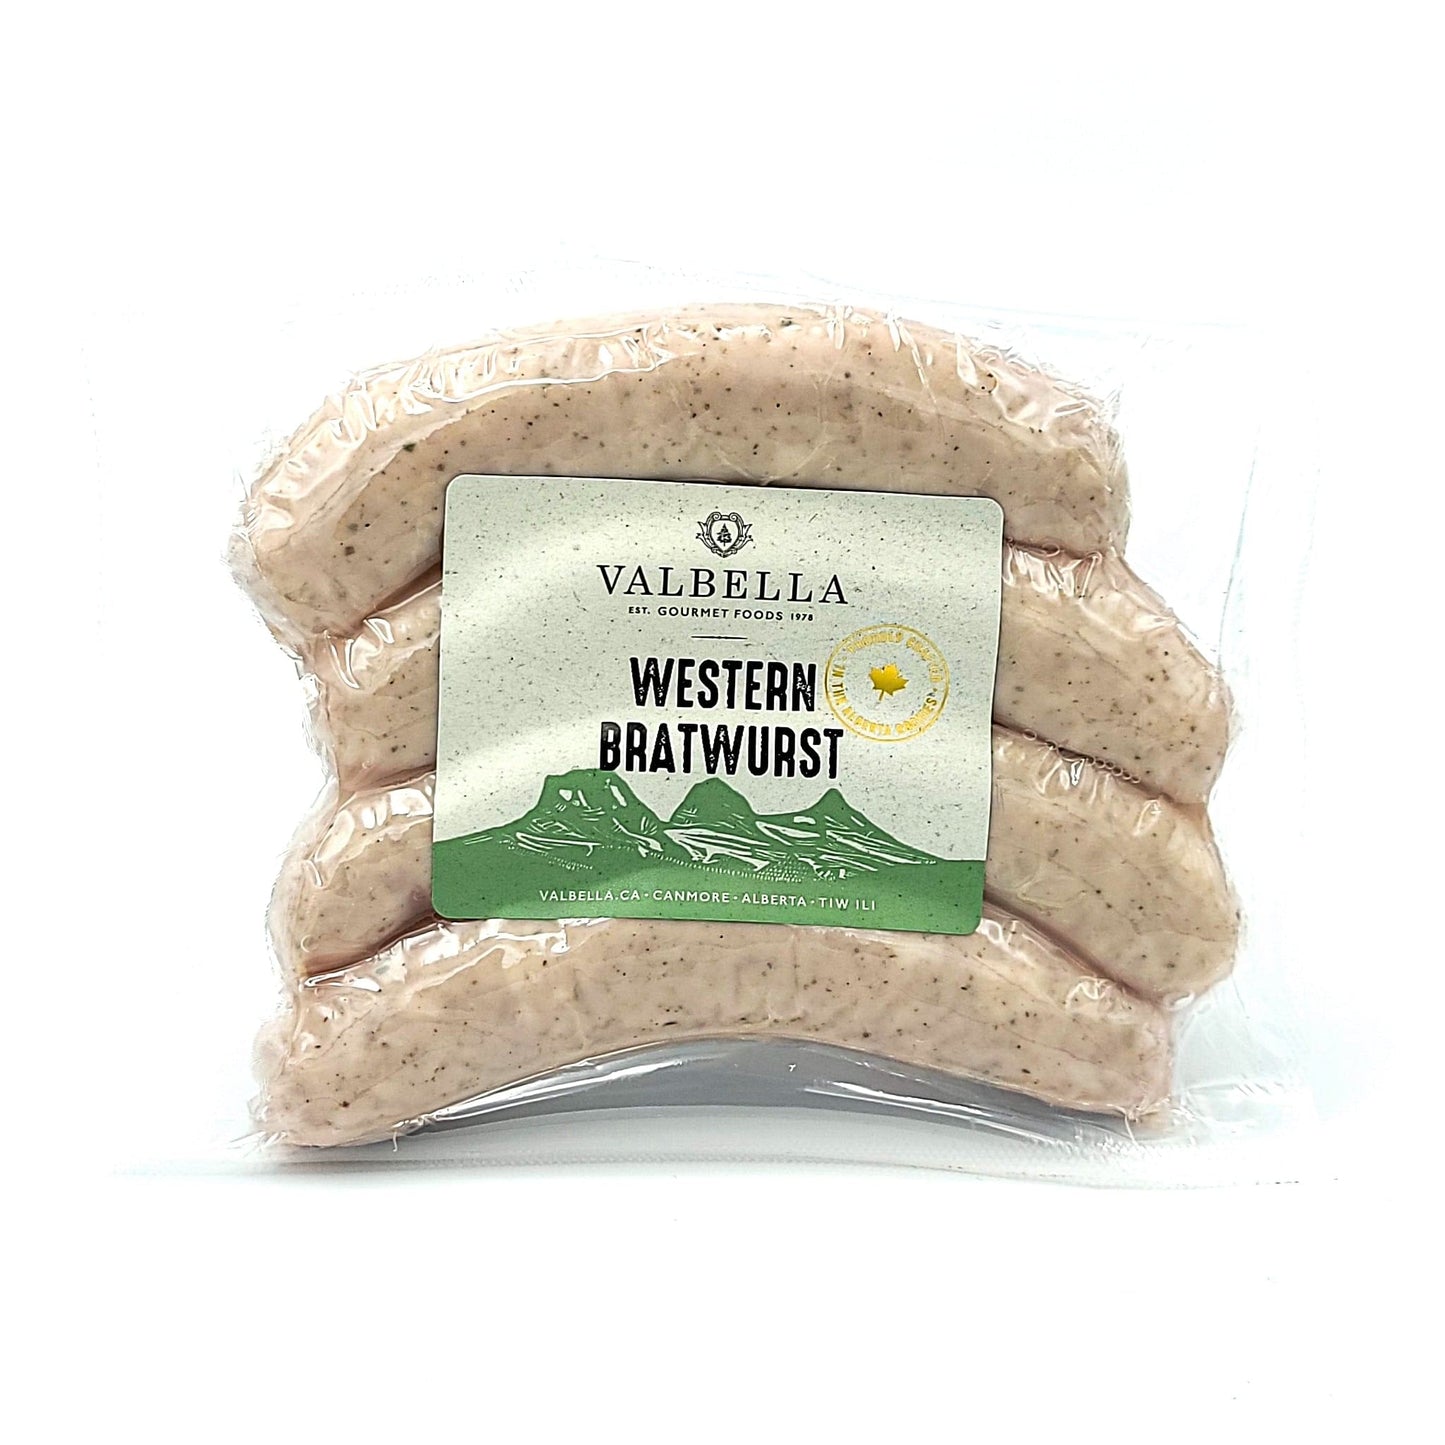 Western Bratwurst - Valbella Gourmet Foods